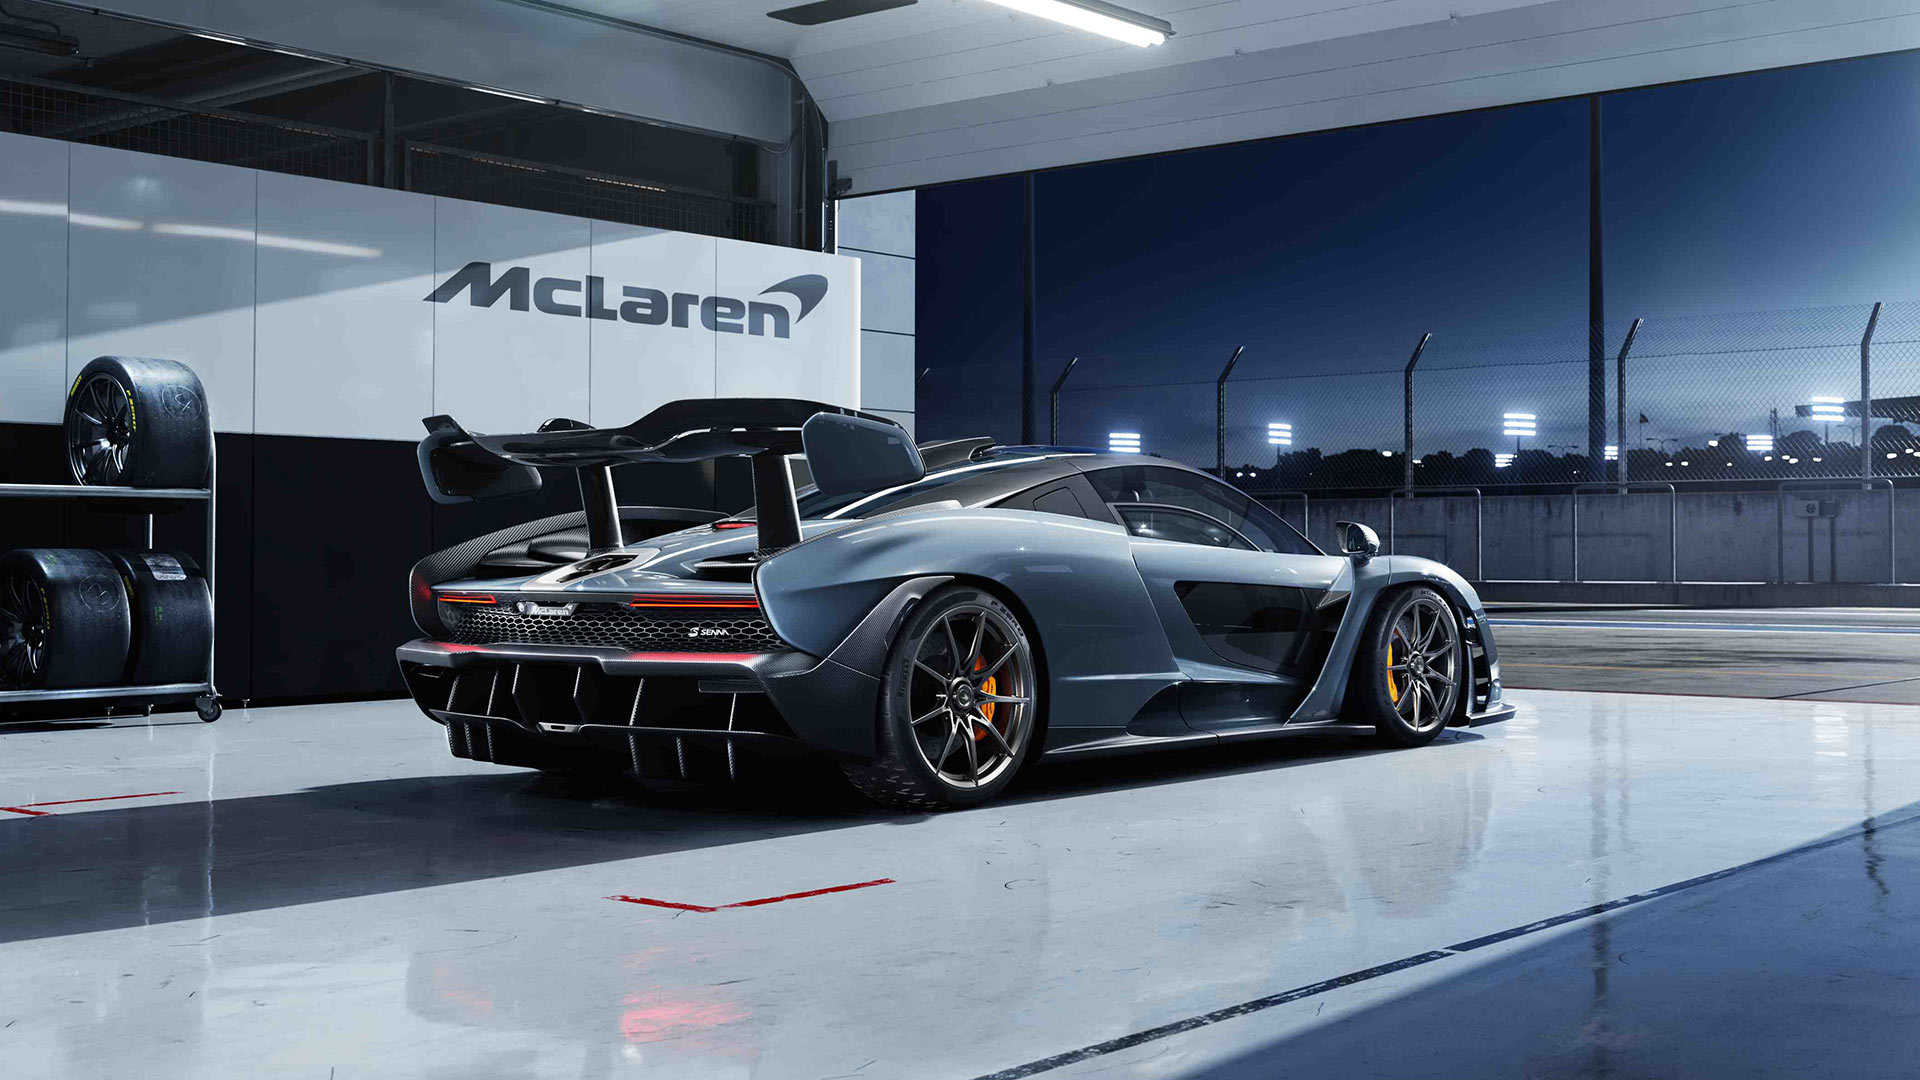 McLaren names a supercar after a legendary driver